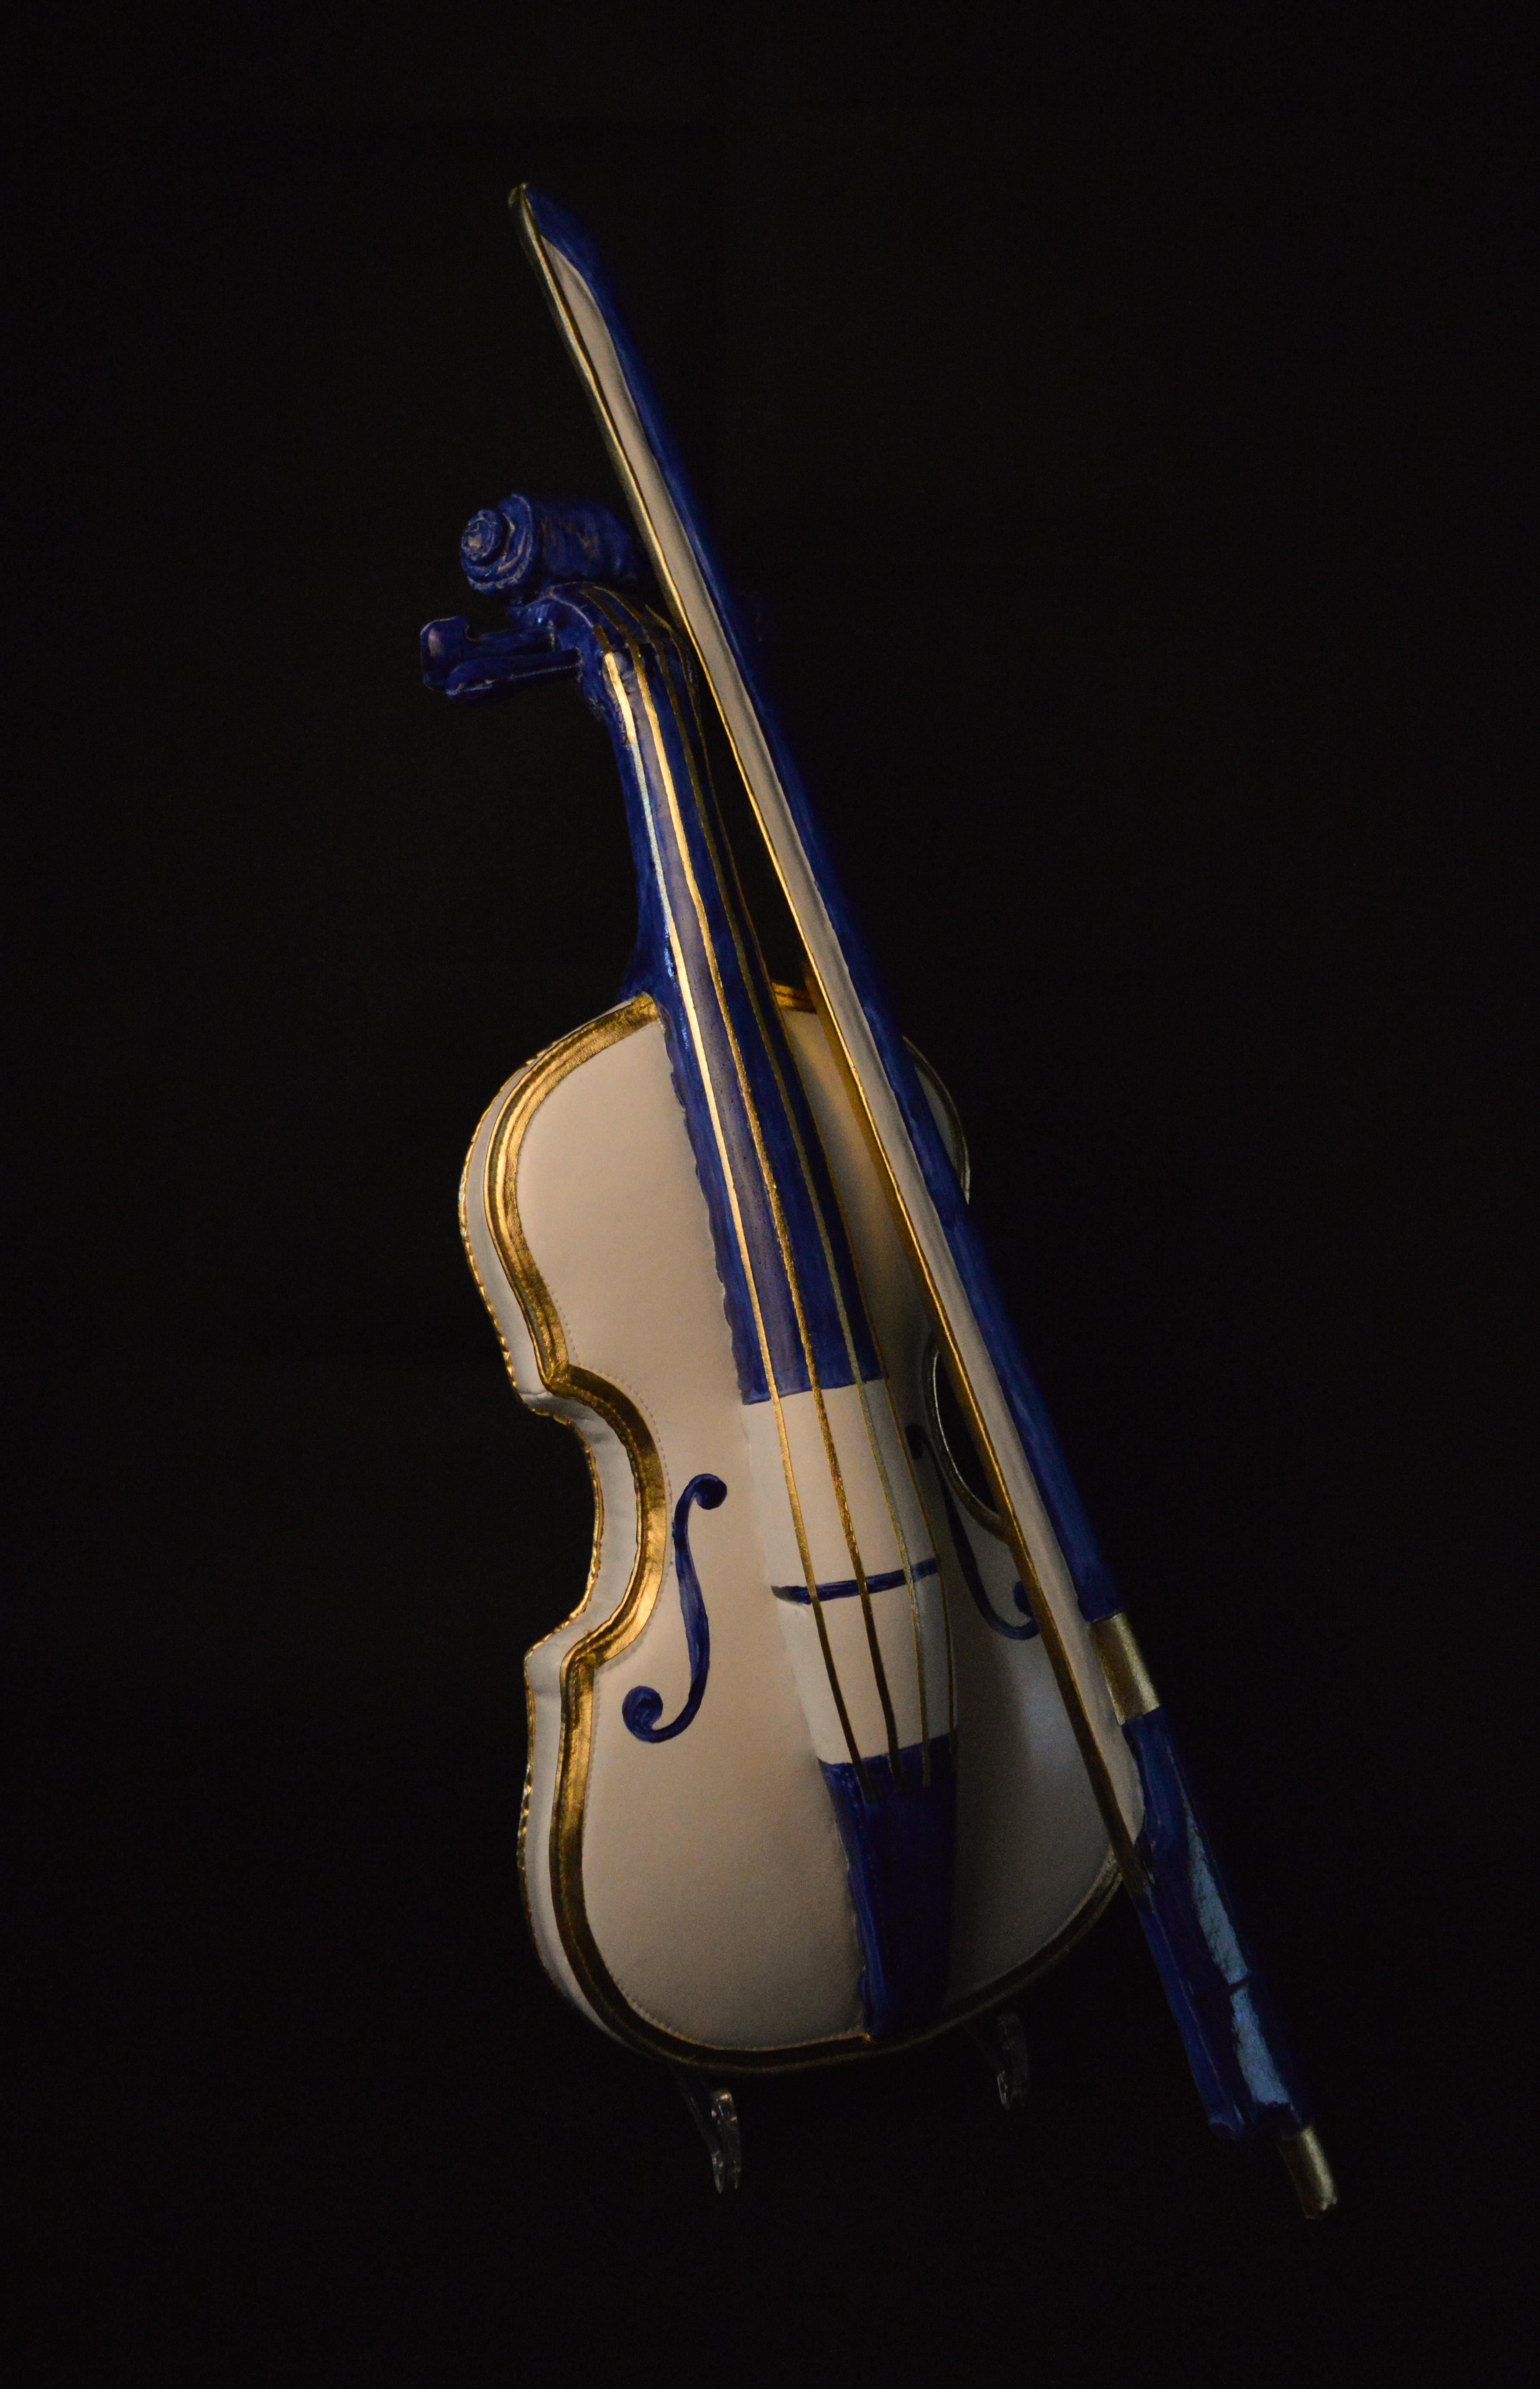 Violin- 21st Century Sculpture, live size, of a figurine